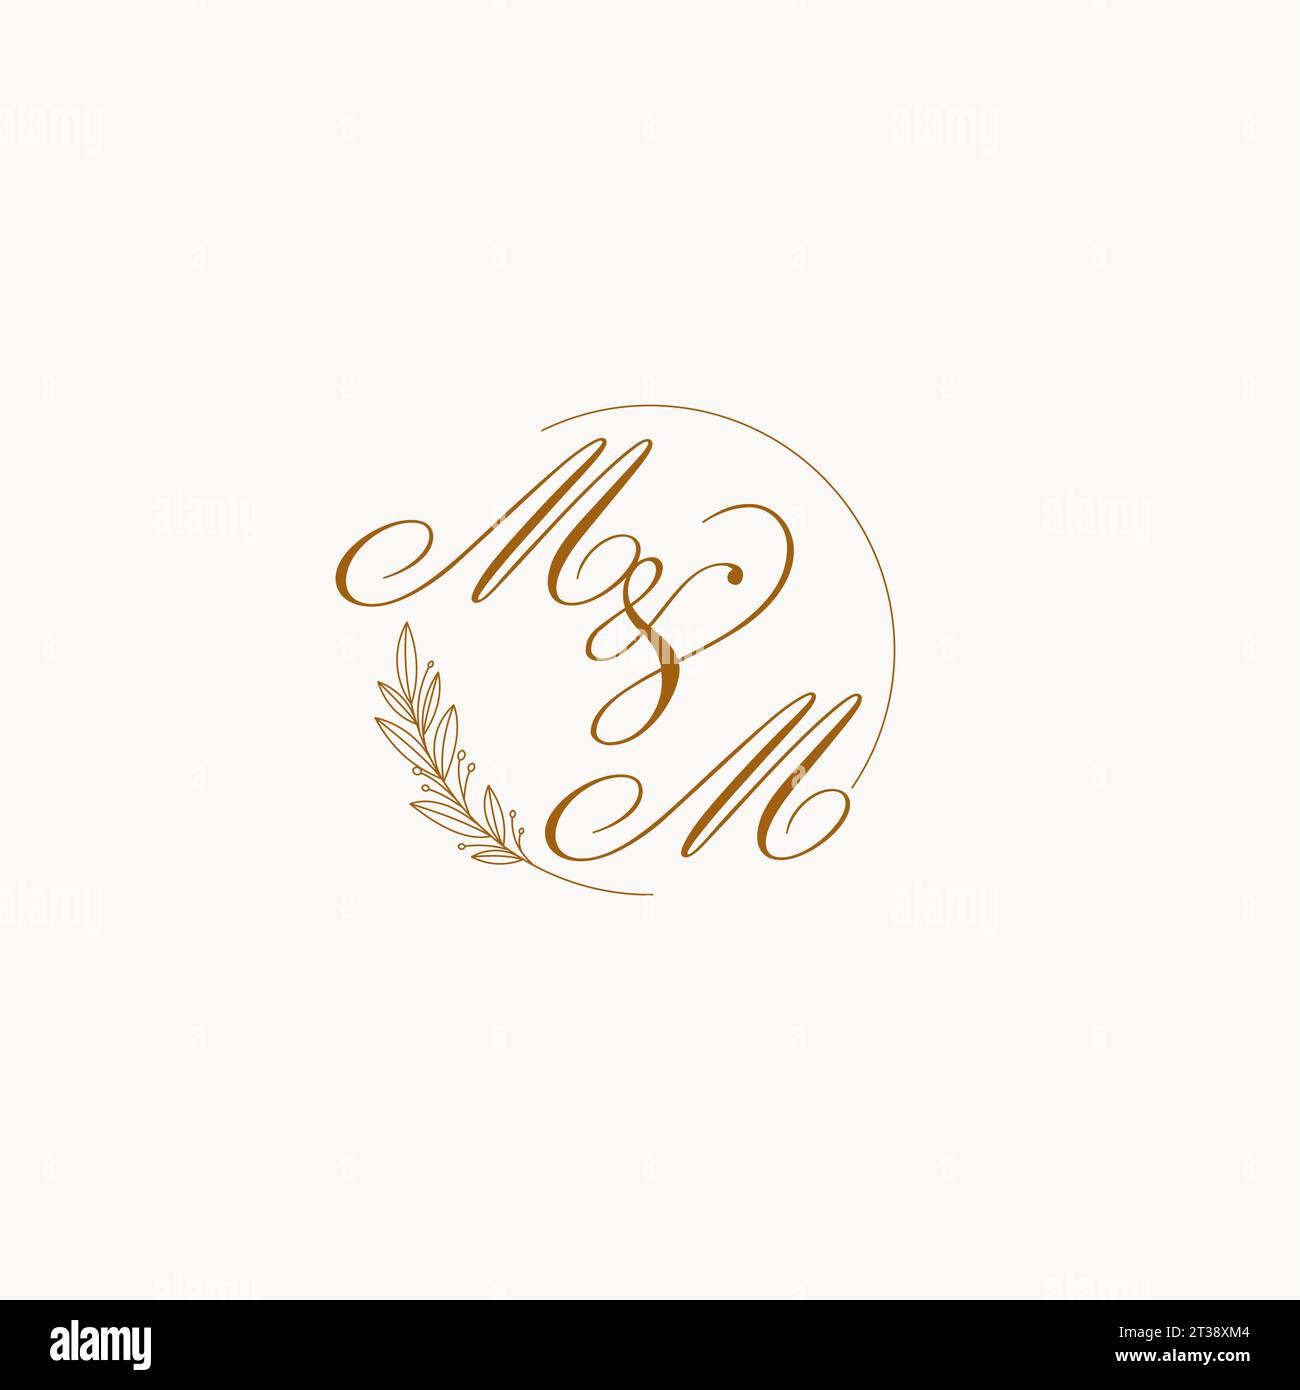 wedding m m monogram